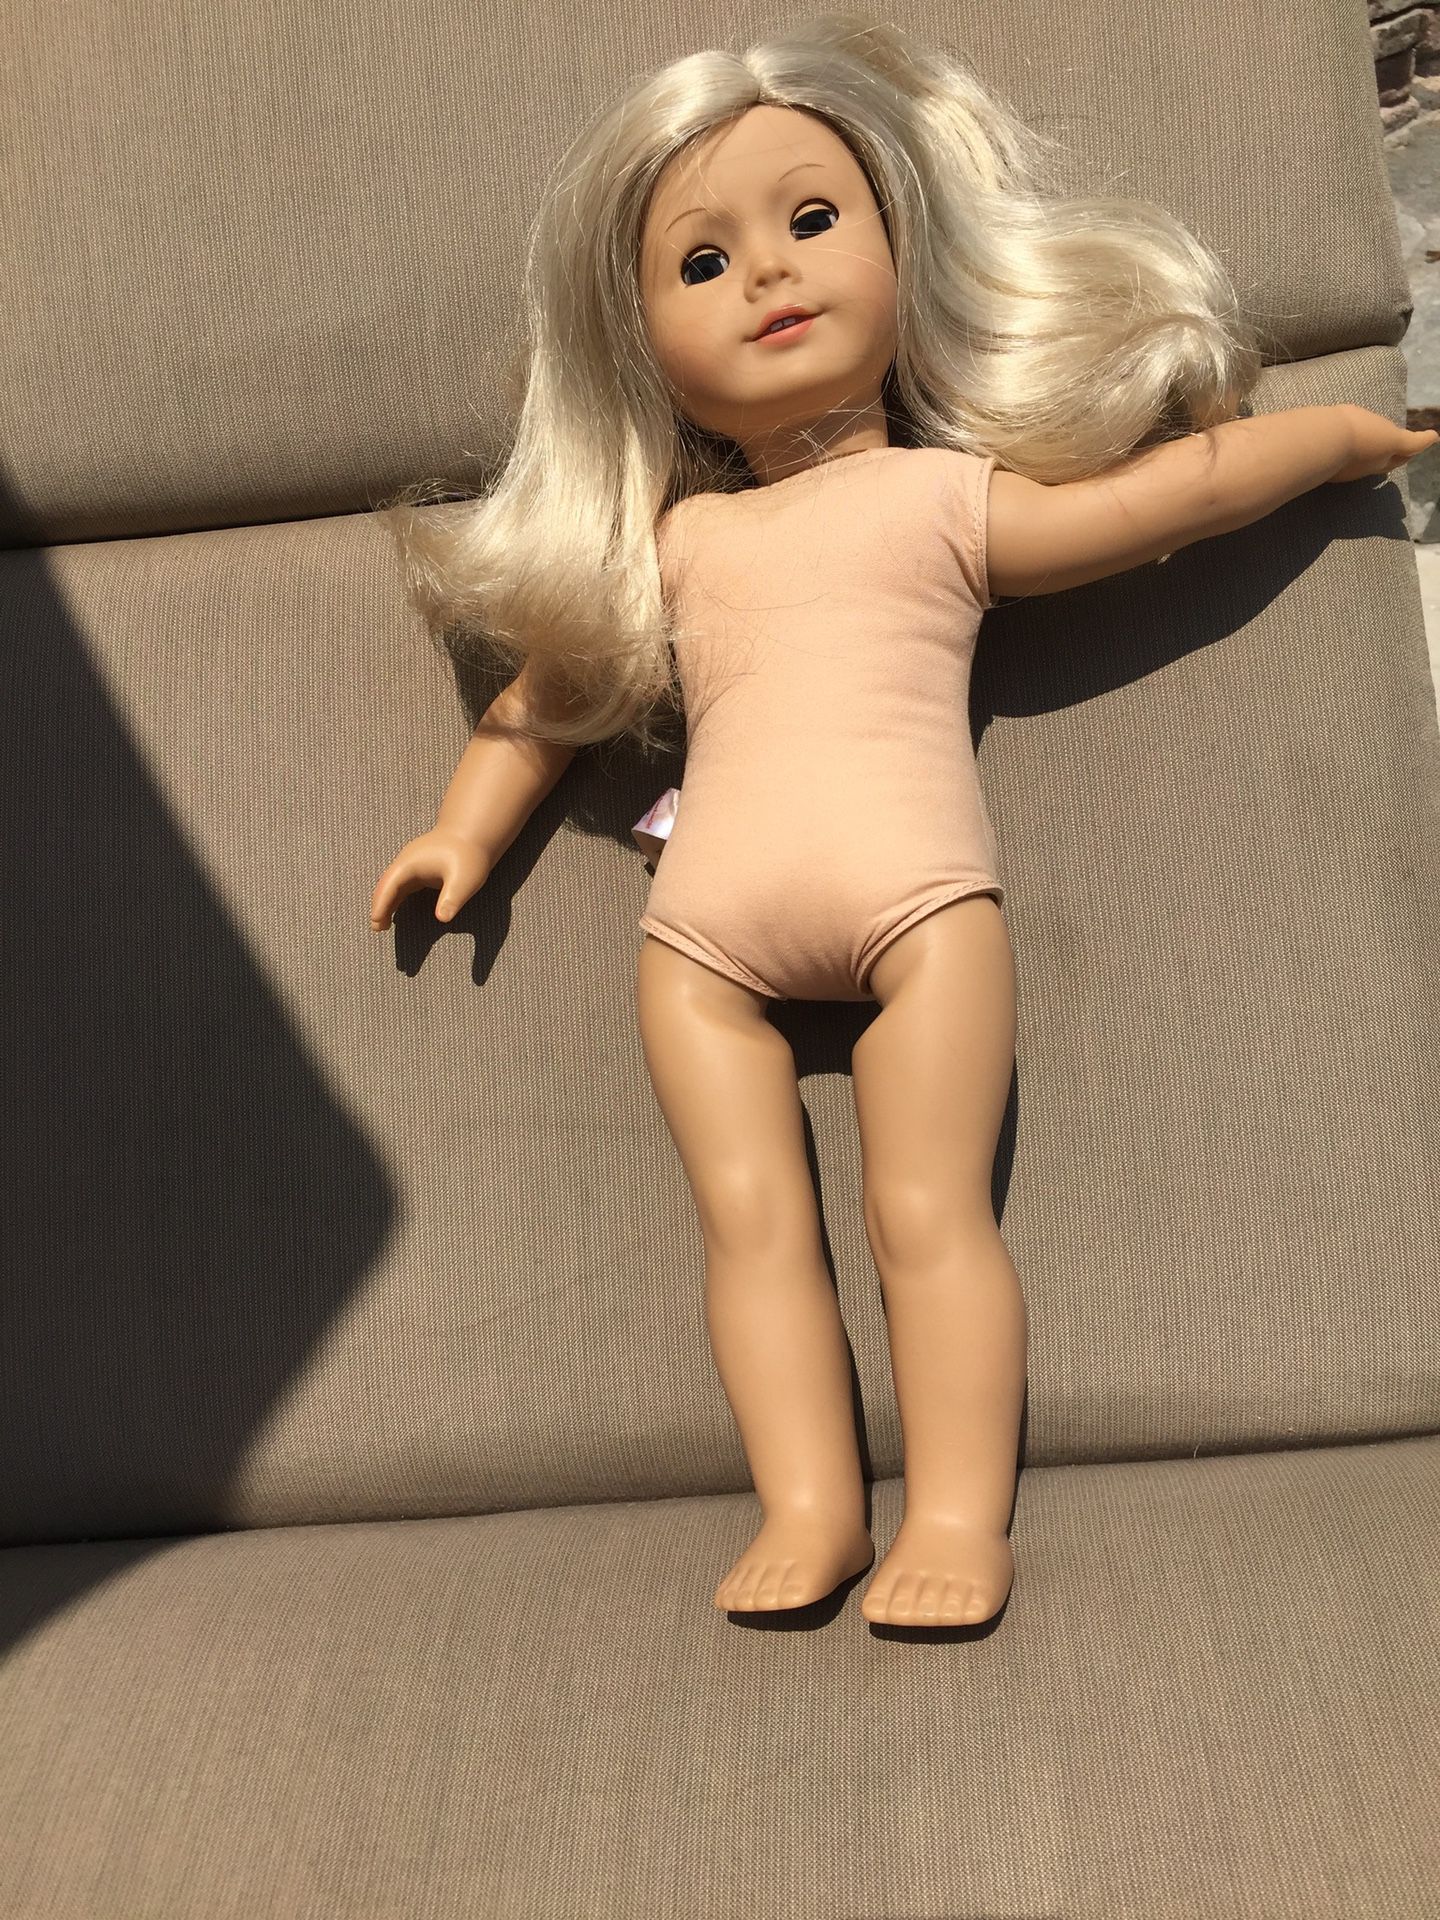 Blonde American Girl Doll